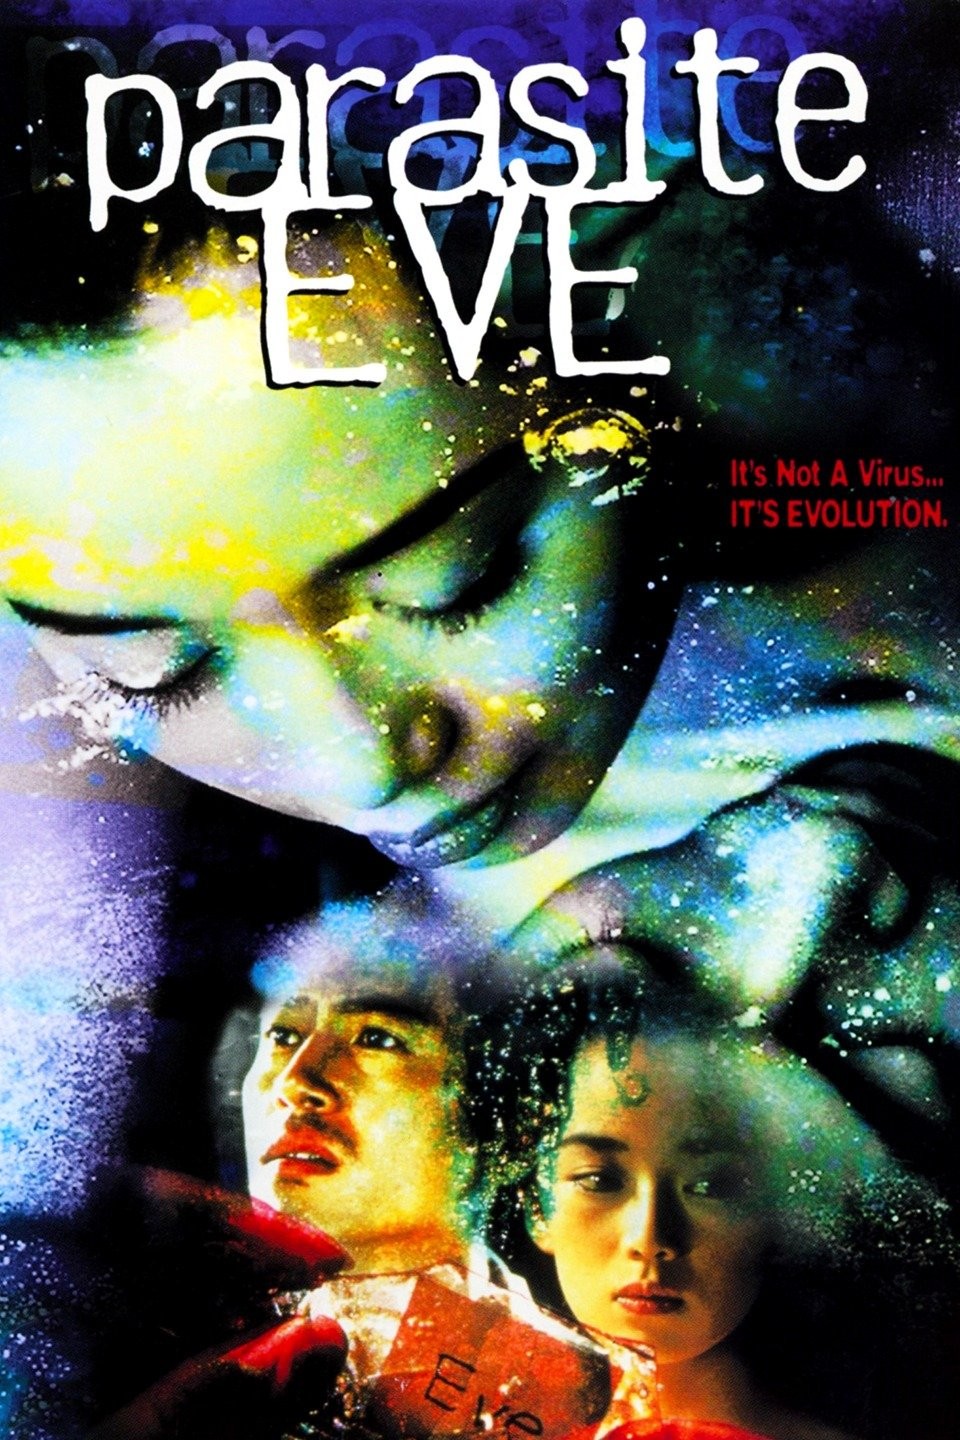 Parasite Eve: Classic Games in Horror - Movie & TV Reviews, Celebrity News